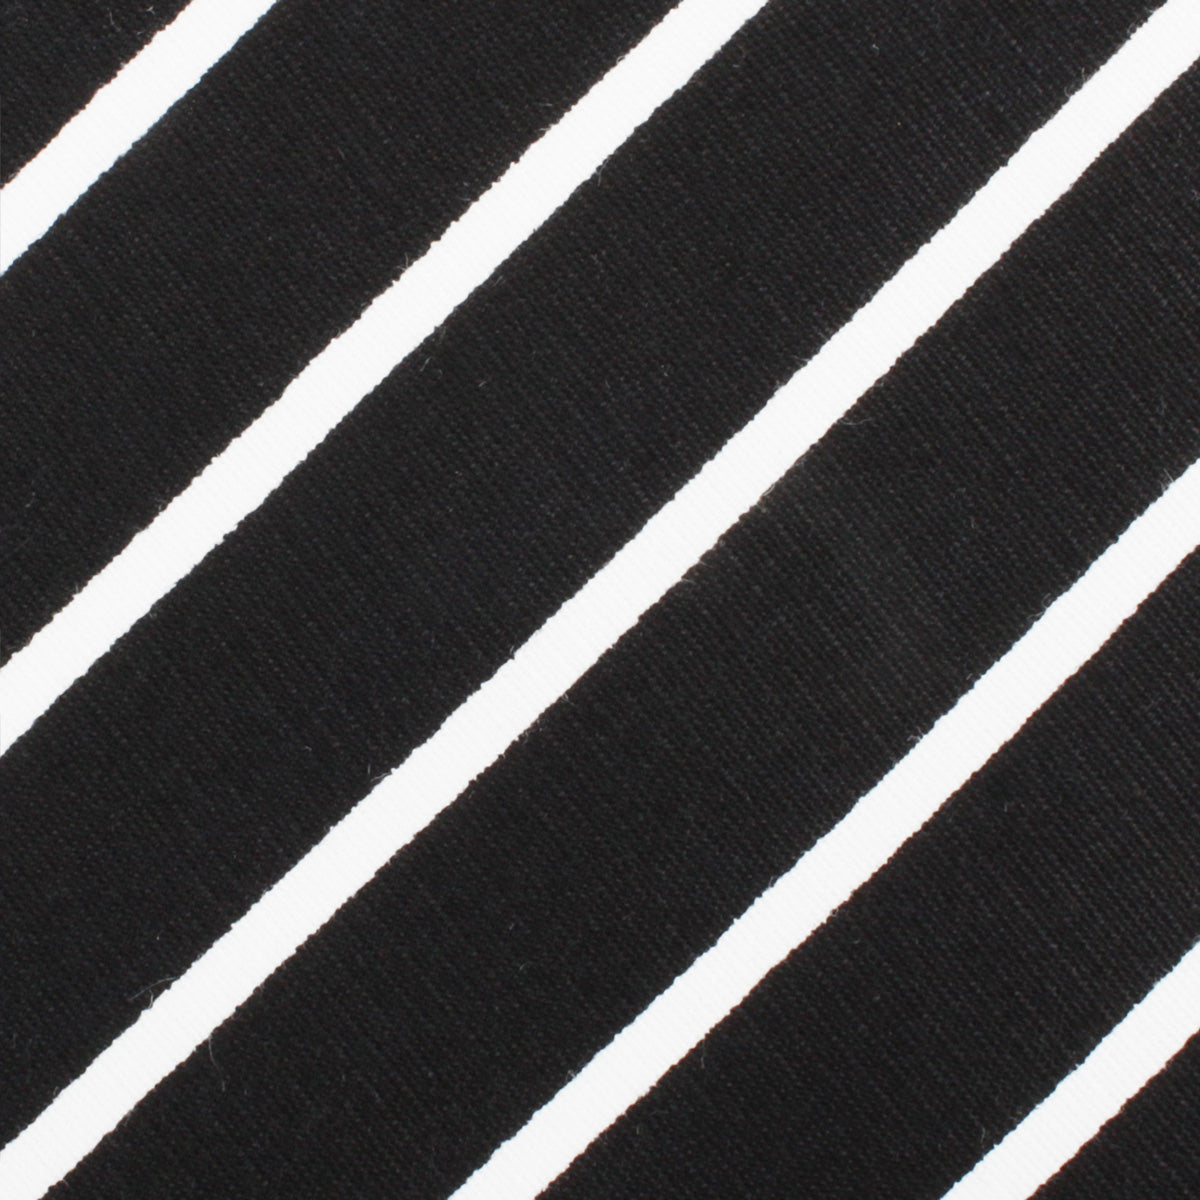 Onyx Black Pencil Striped Linen Necktie Fabric